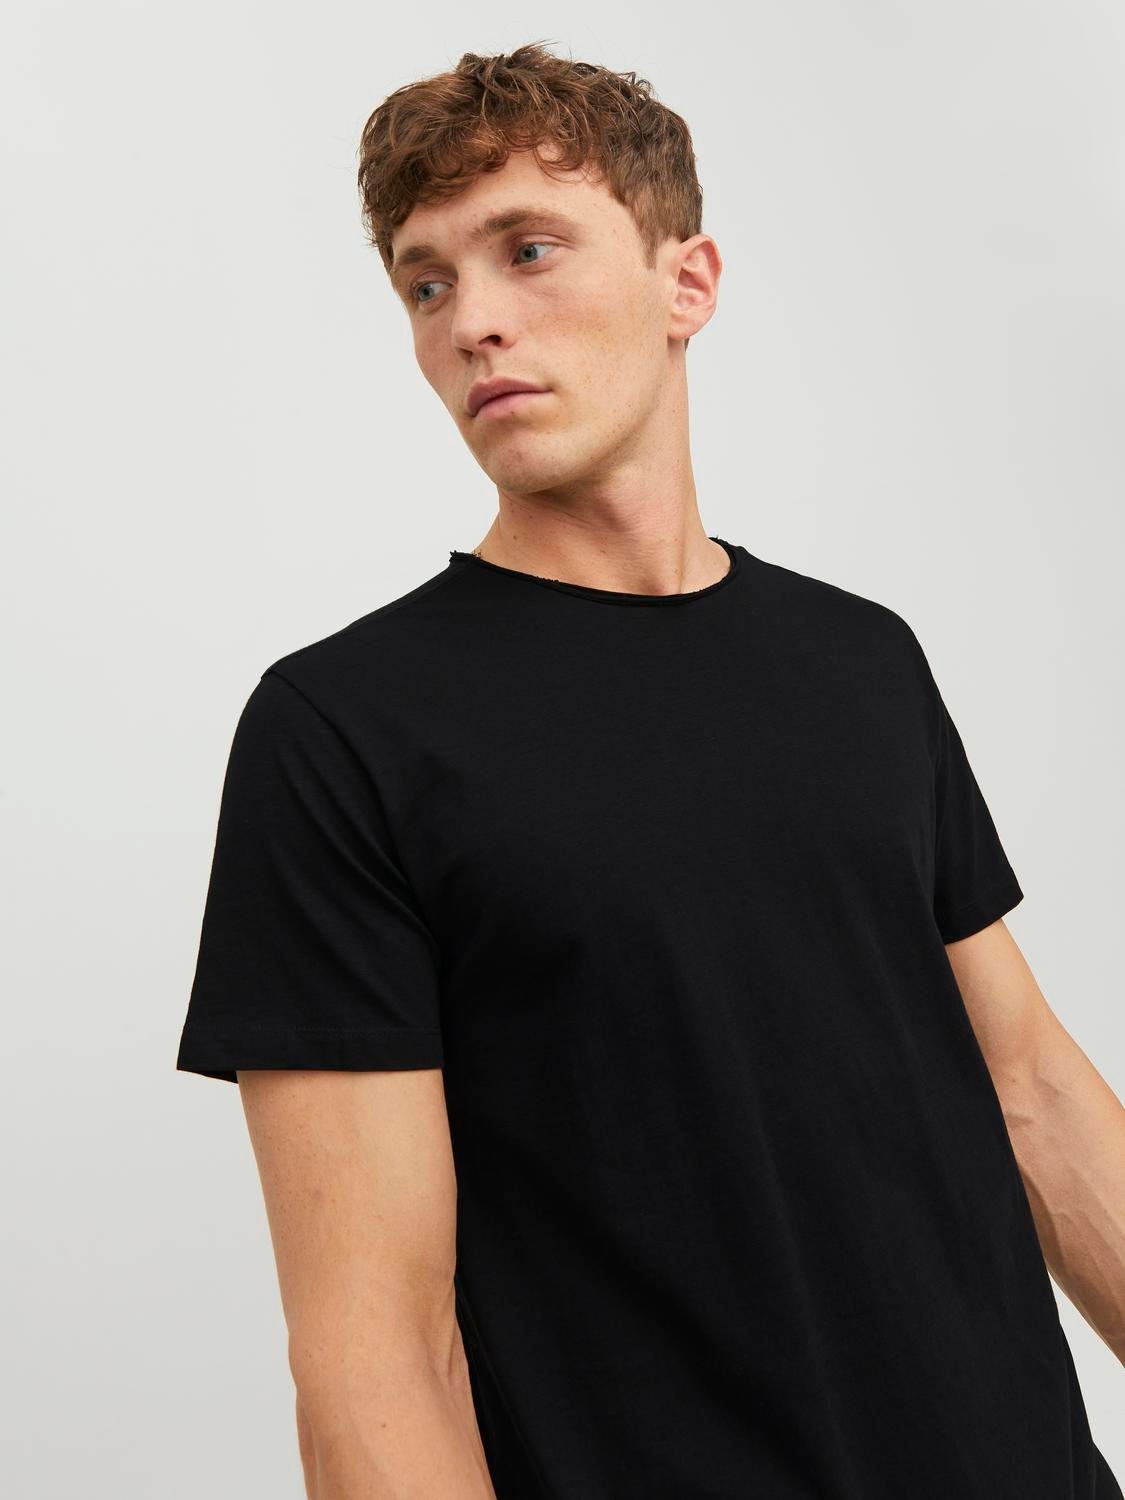 neck Jack | T-shirt Black & Crew | Plain Jones®